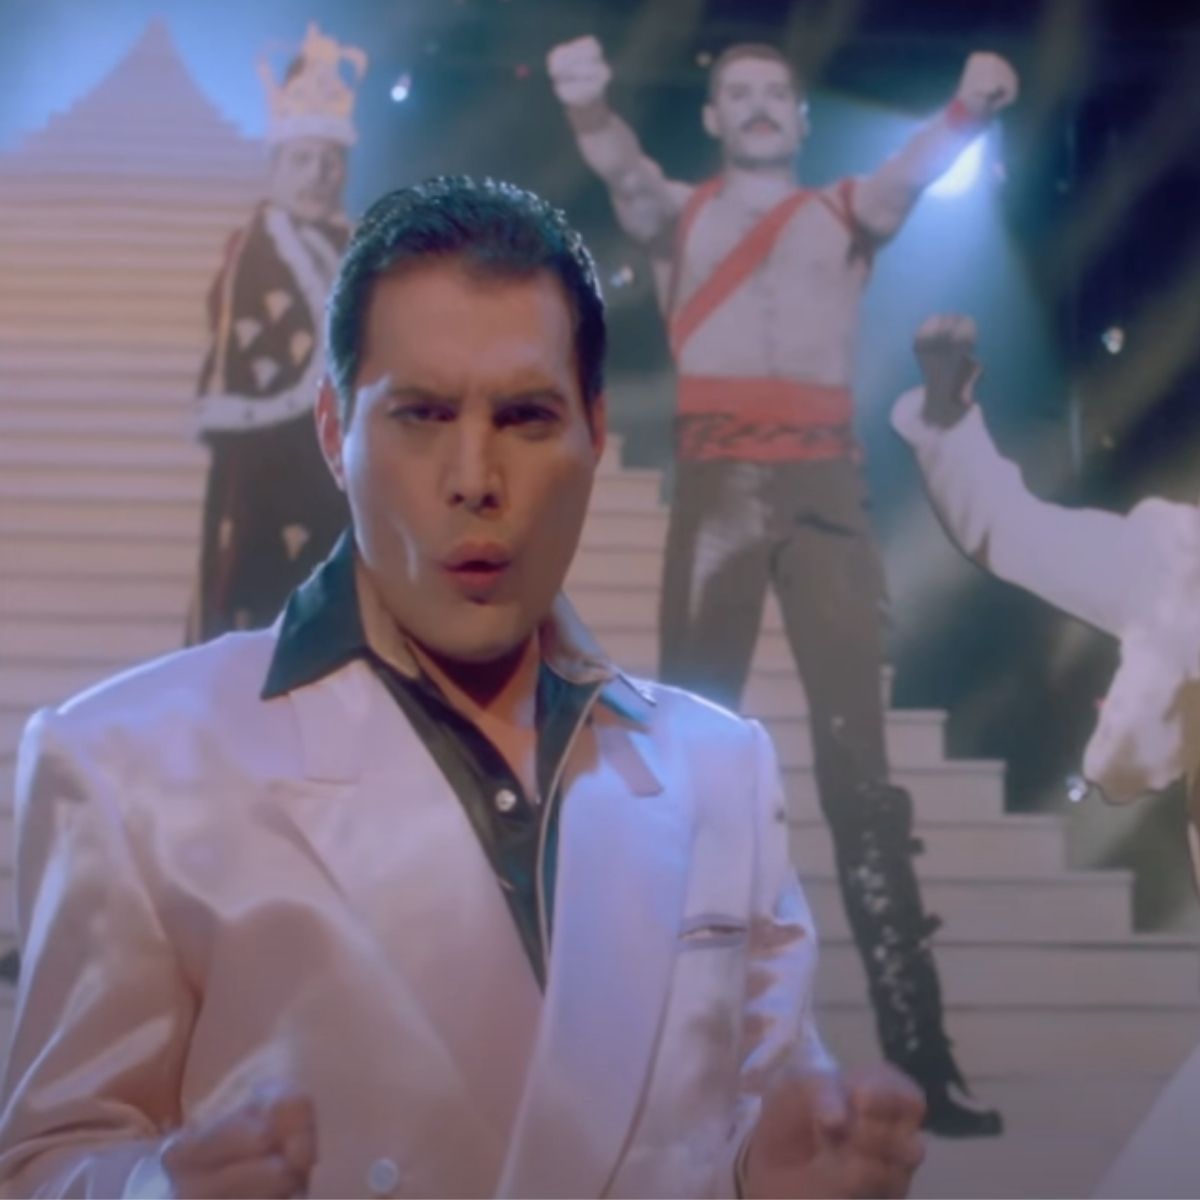 Freddie et ses copies en carton dans la vidéo de "The Great Pretender".